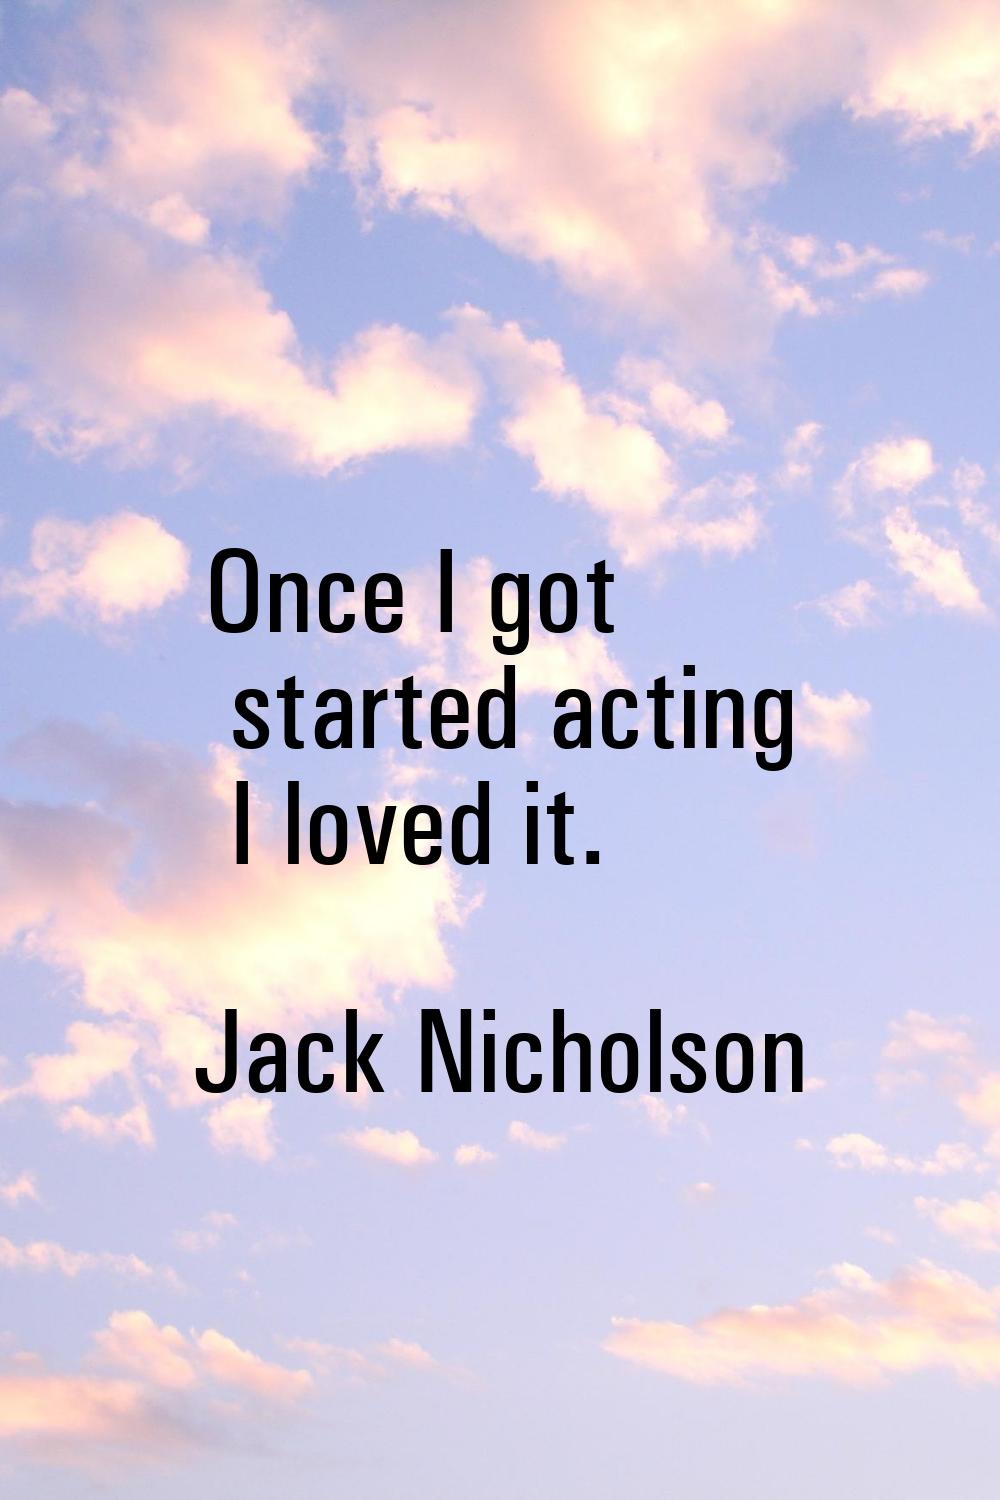 Once I got started acting I loved it.